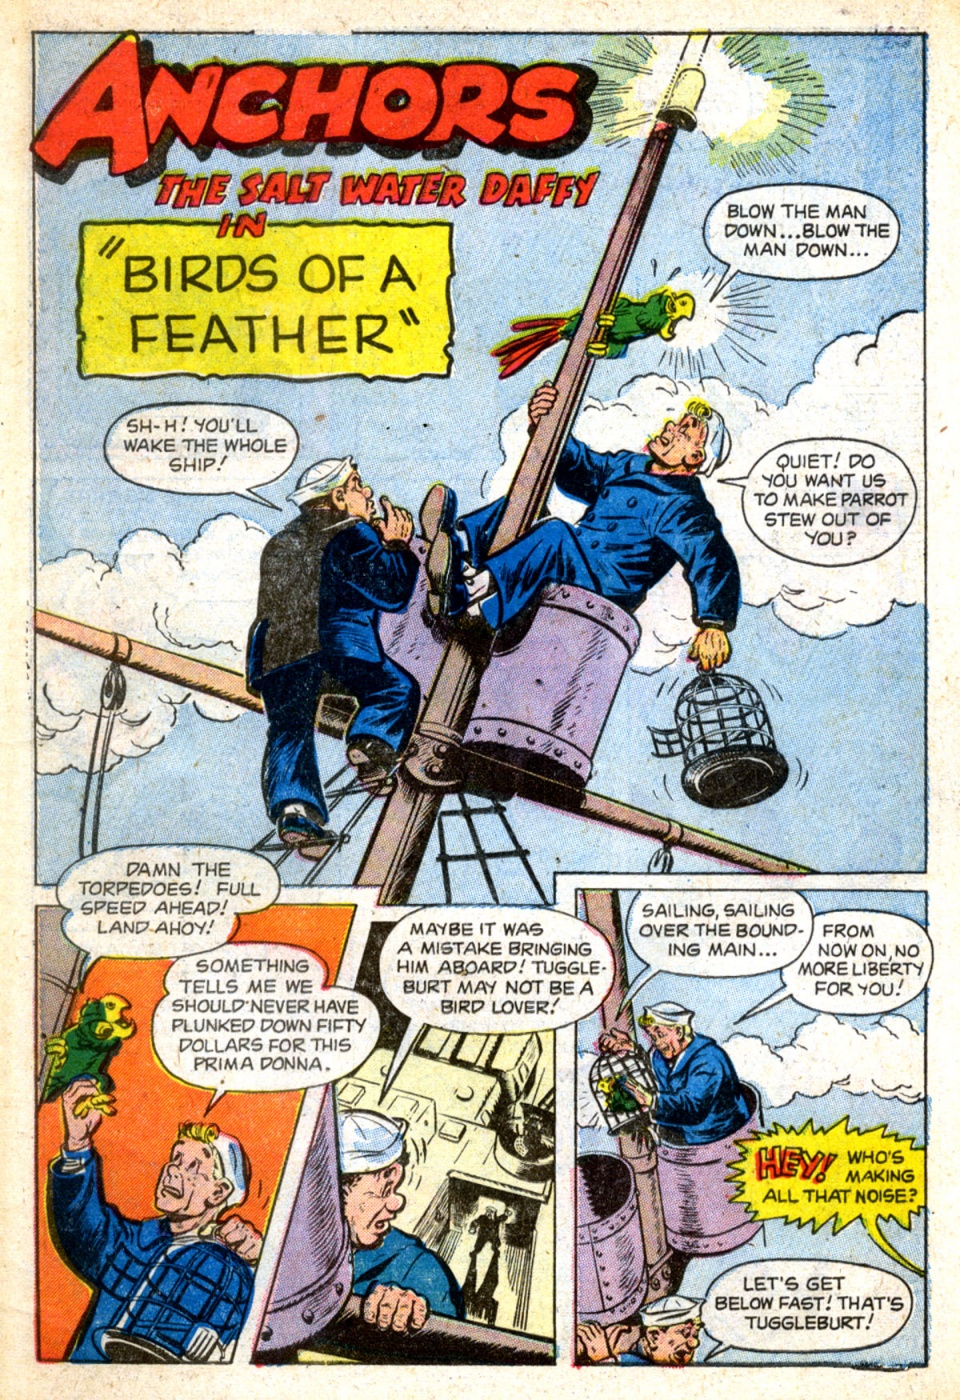 Anchors the Salt Water Daffy - Comics (b) (3)